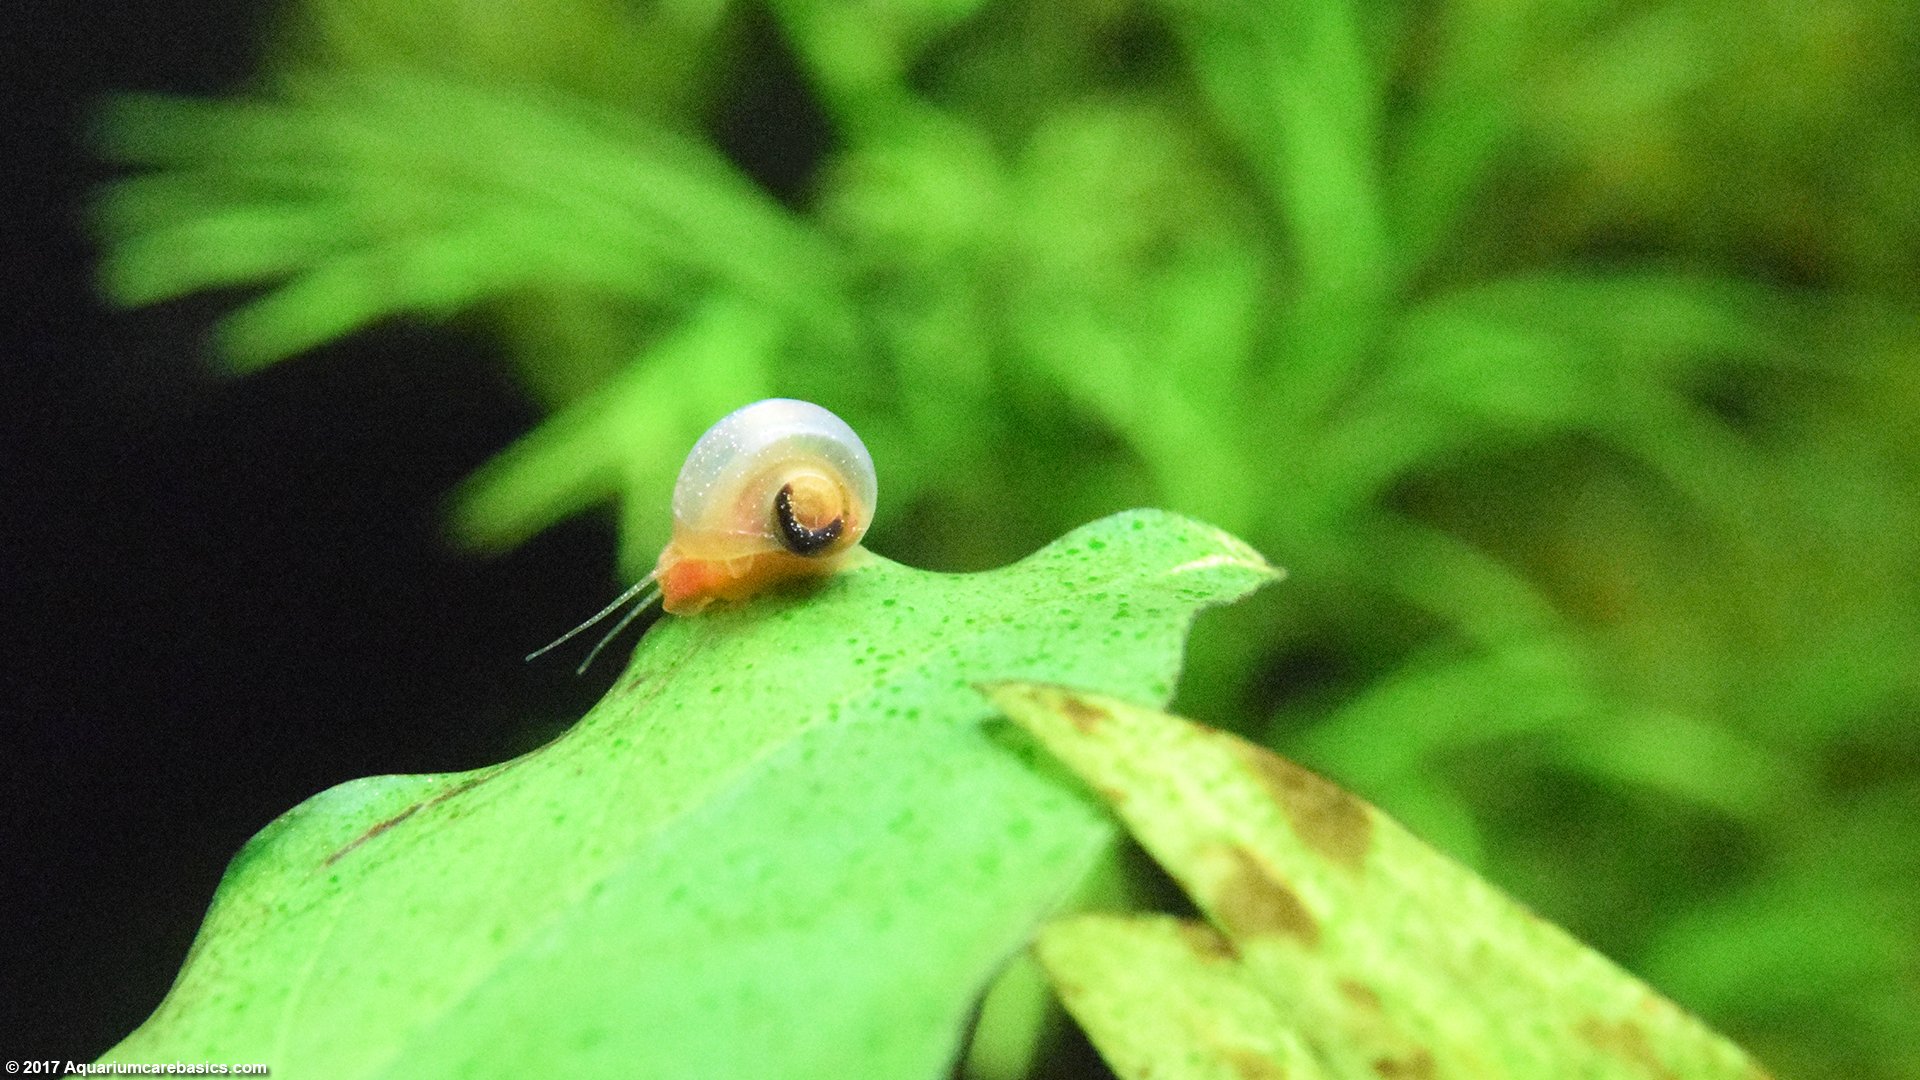 https://www.aquariumcarebasics.com/images/anubias-barteri-ramshorn-snail.jpg